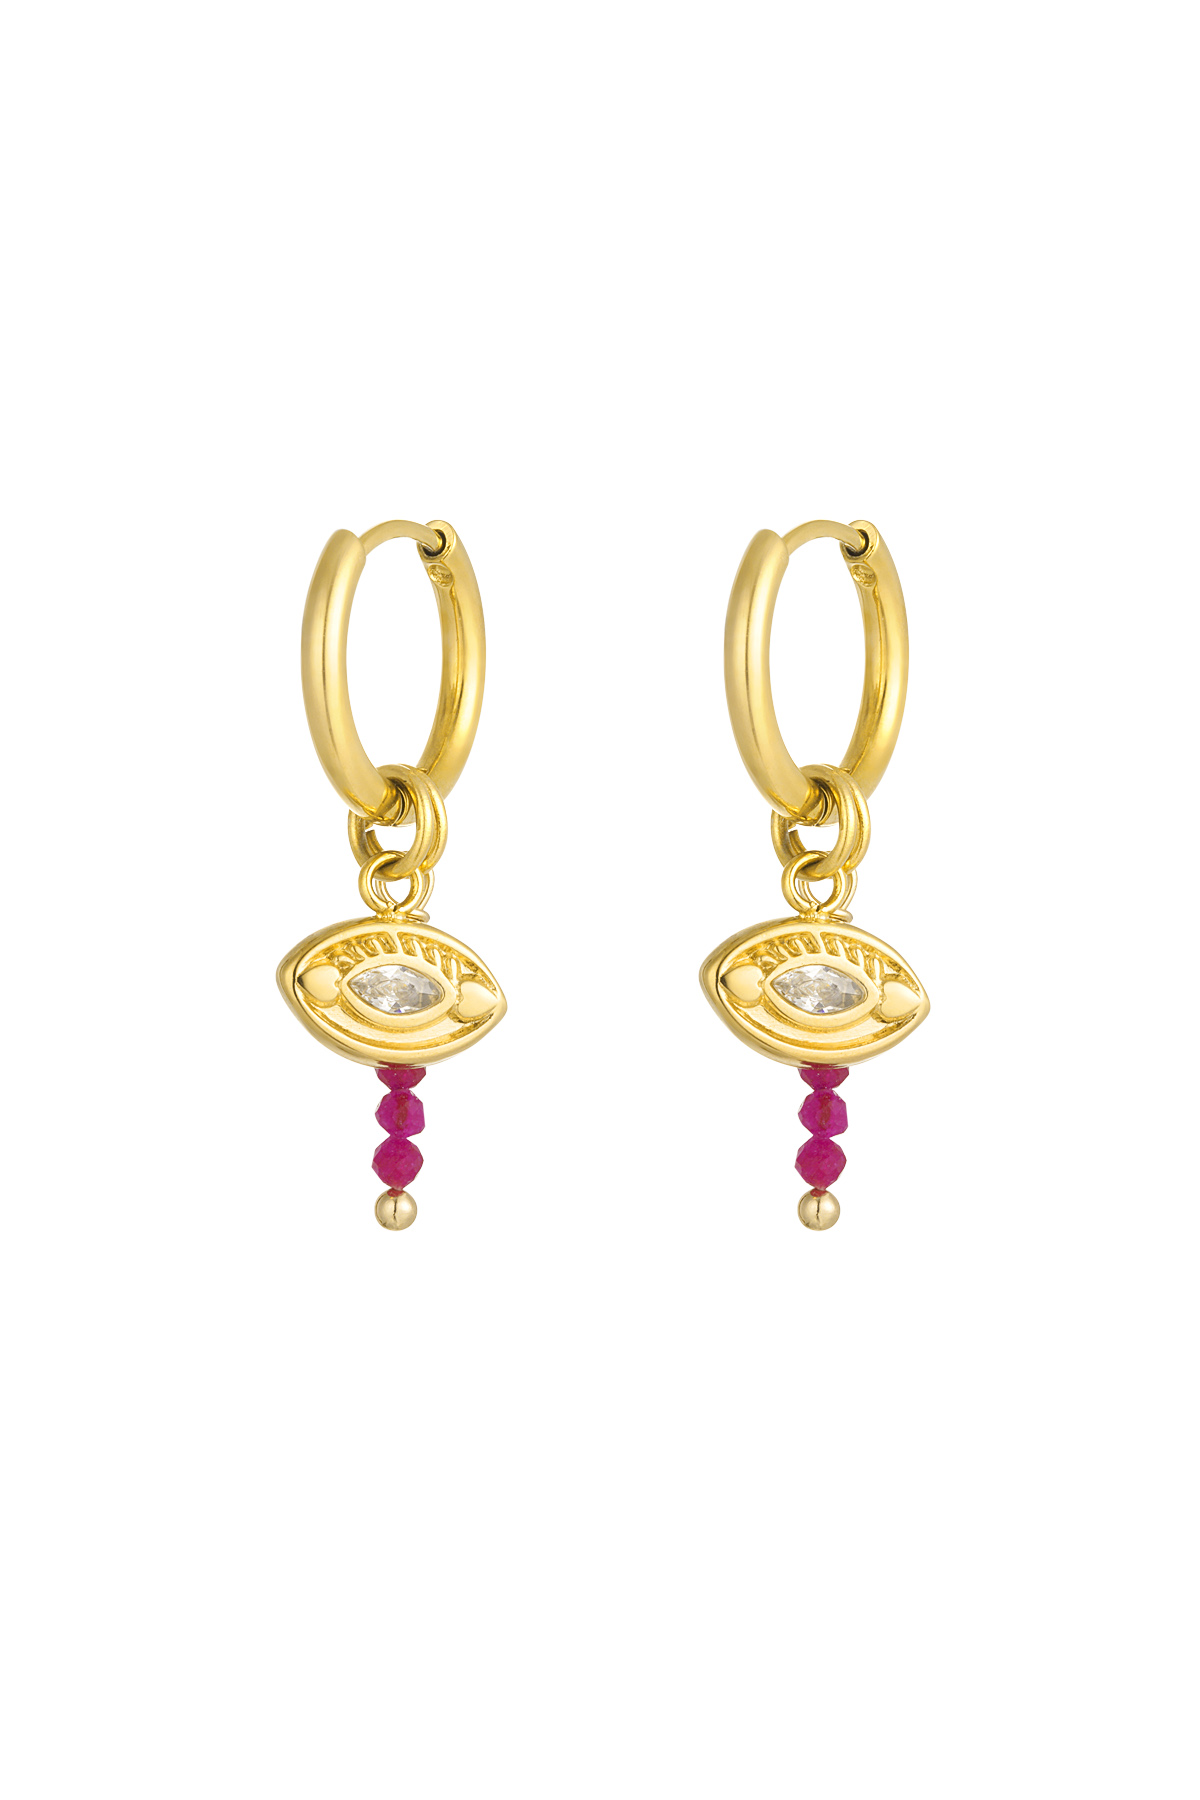 Eye earrings with beads - gold/fuchsia